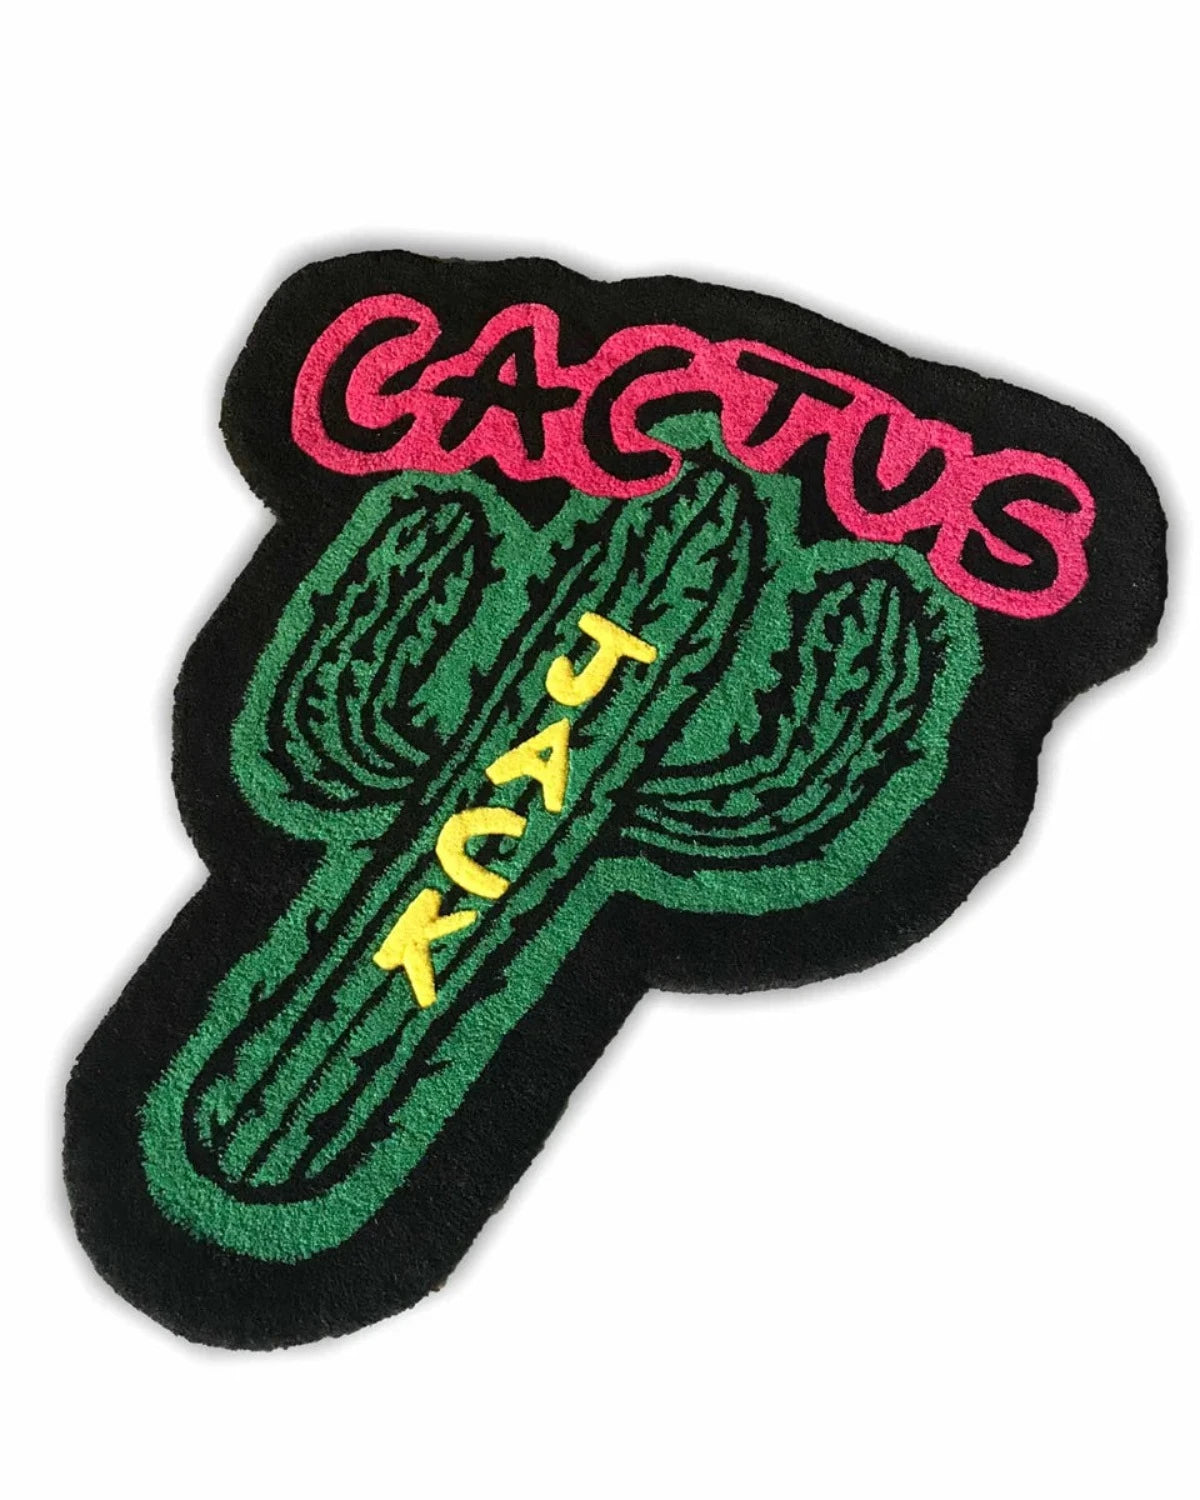 Cactus Jack Rug